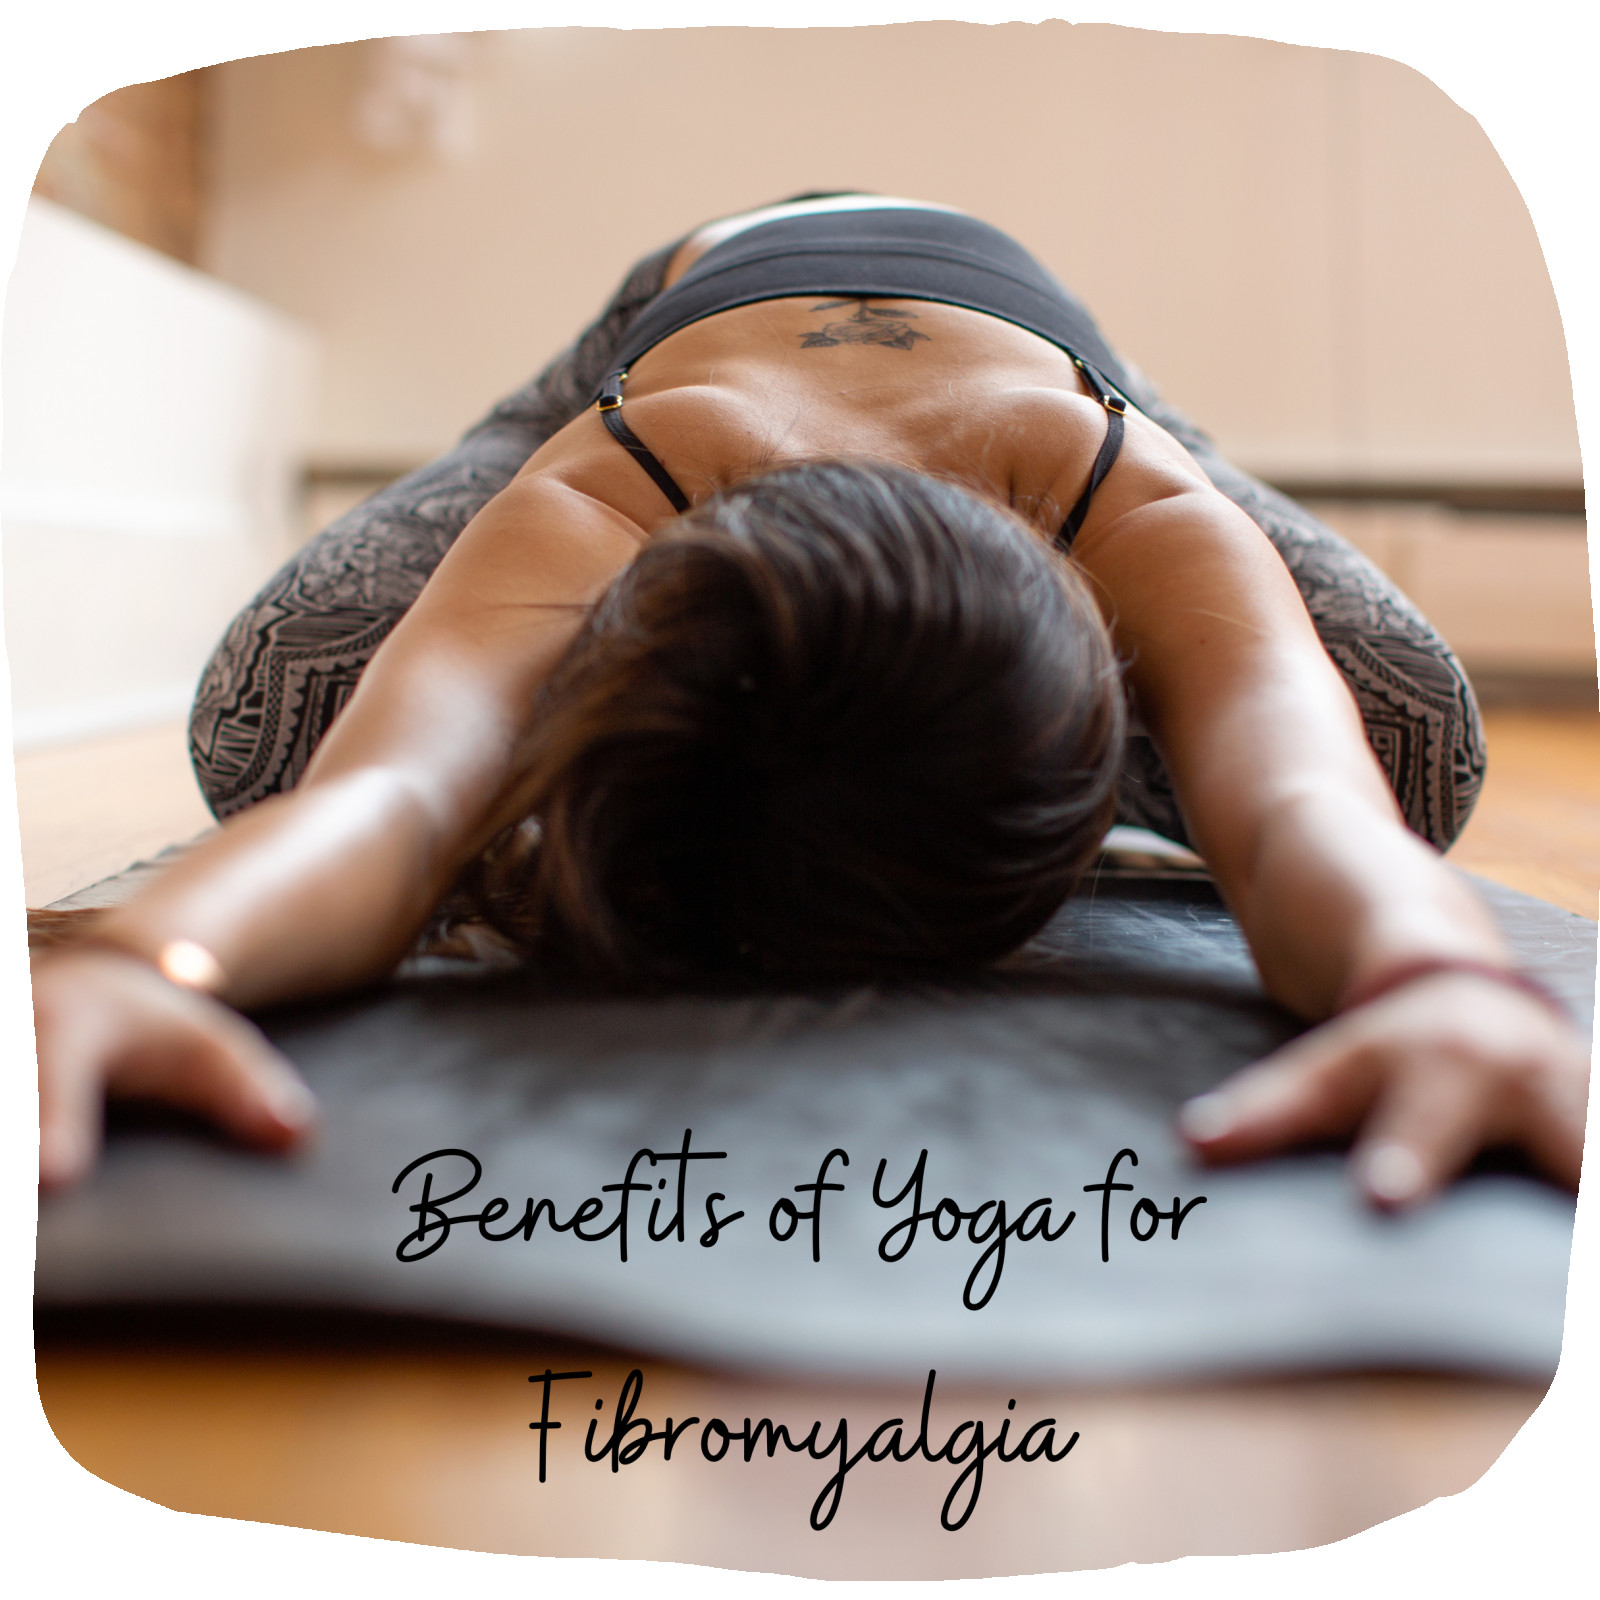 The Benefits of Yoga for Fibromyalgia